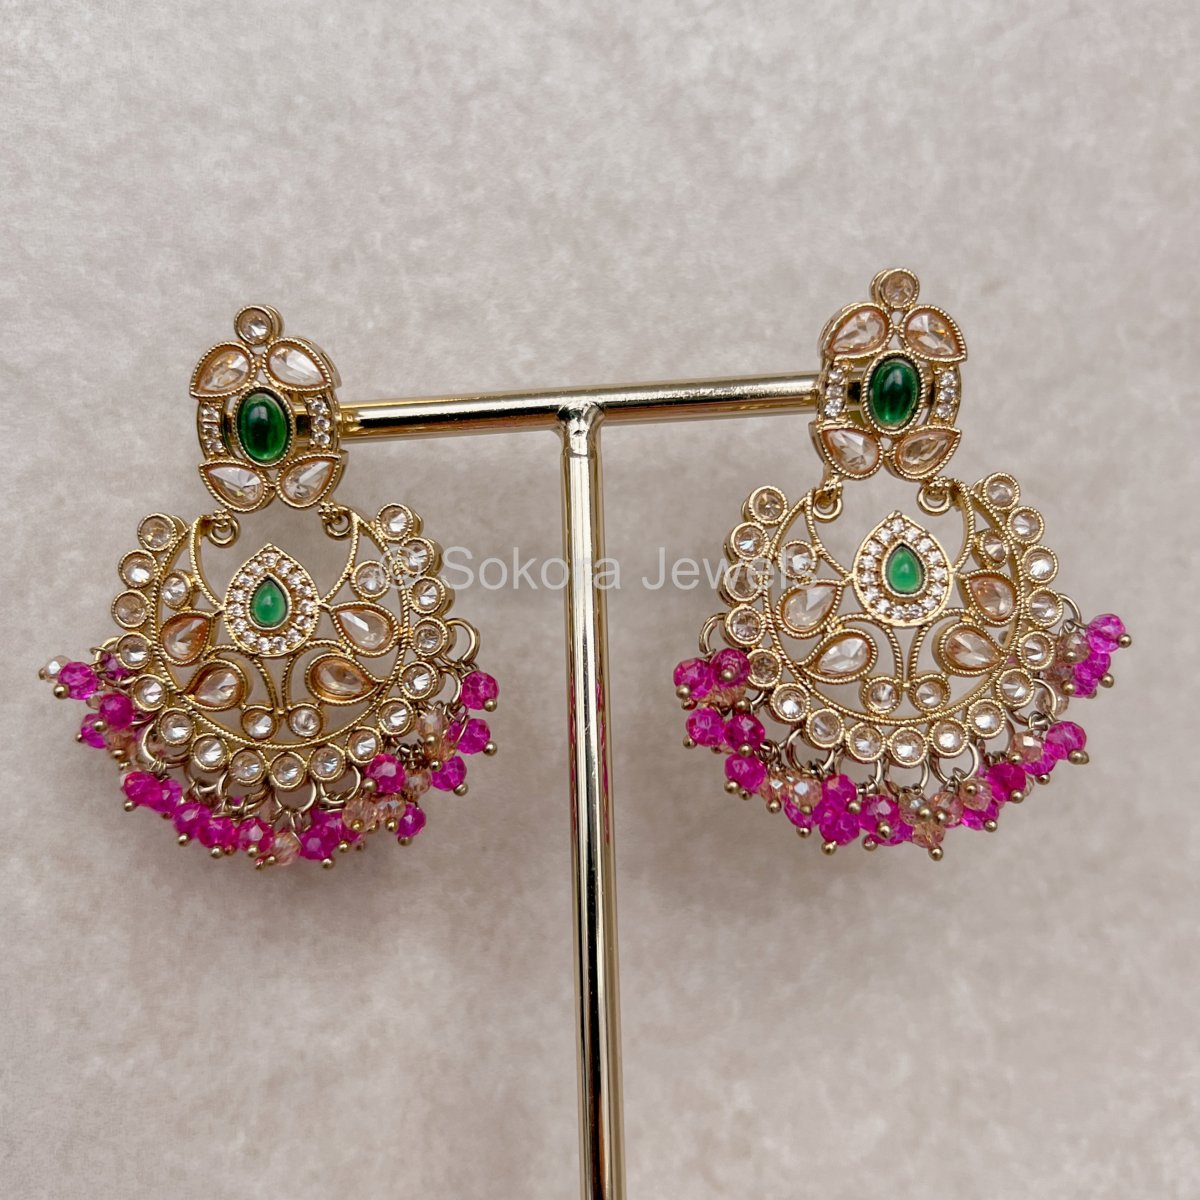 Amreen Small Earrings - Pink/Green - SOKORA JEWELSAmreen Small Earrings - Pink/Green